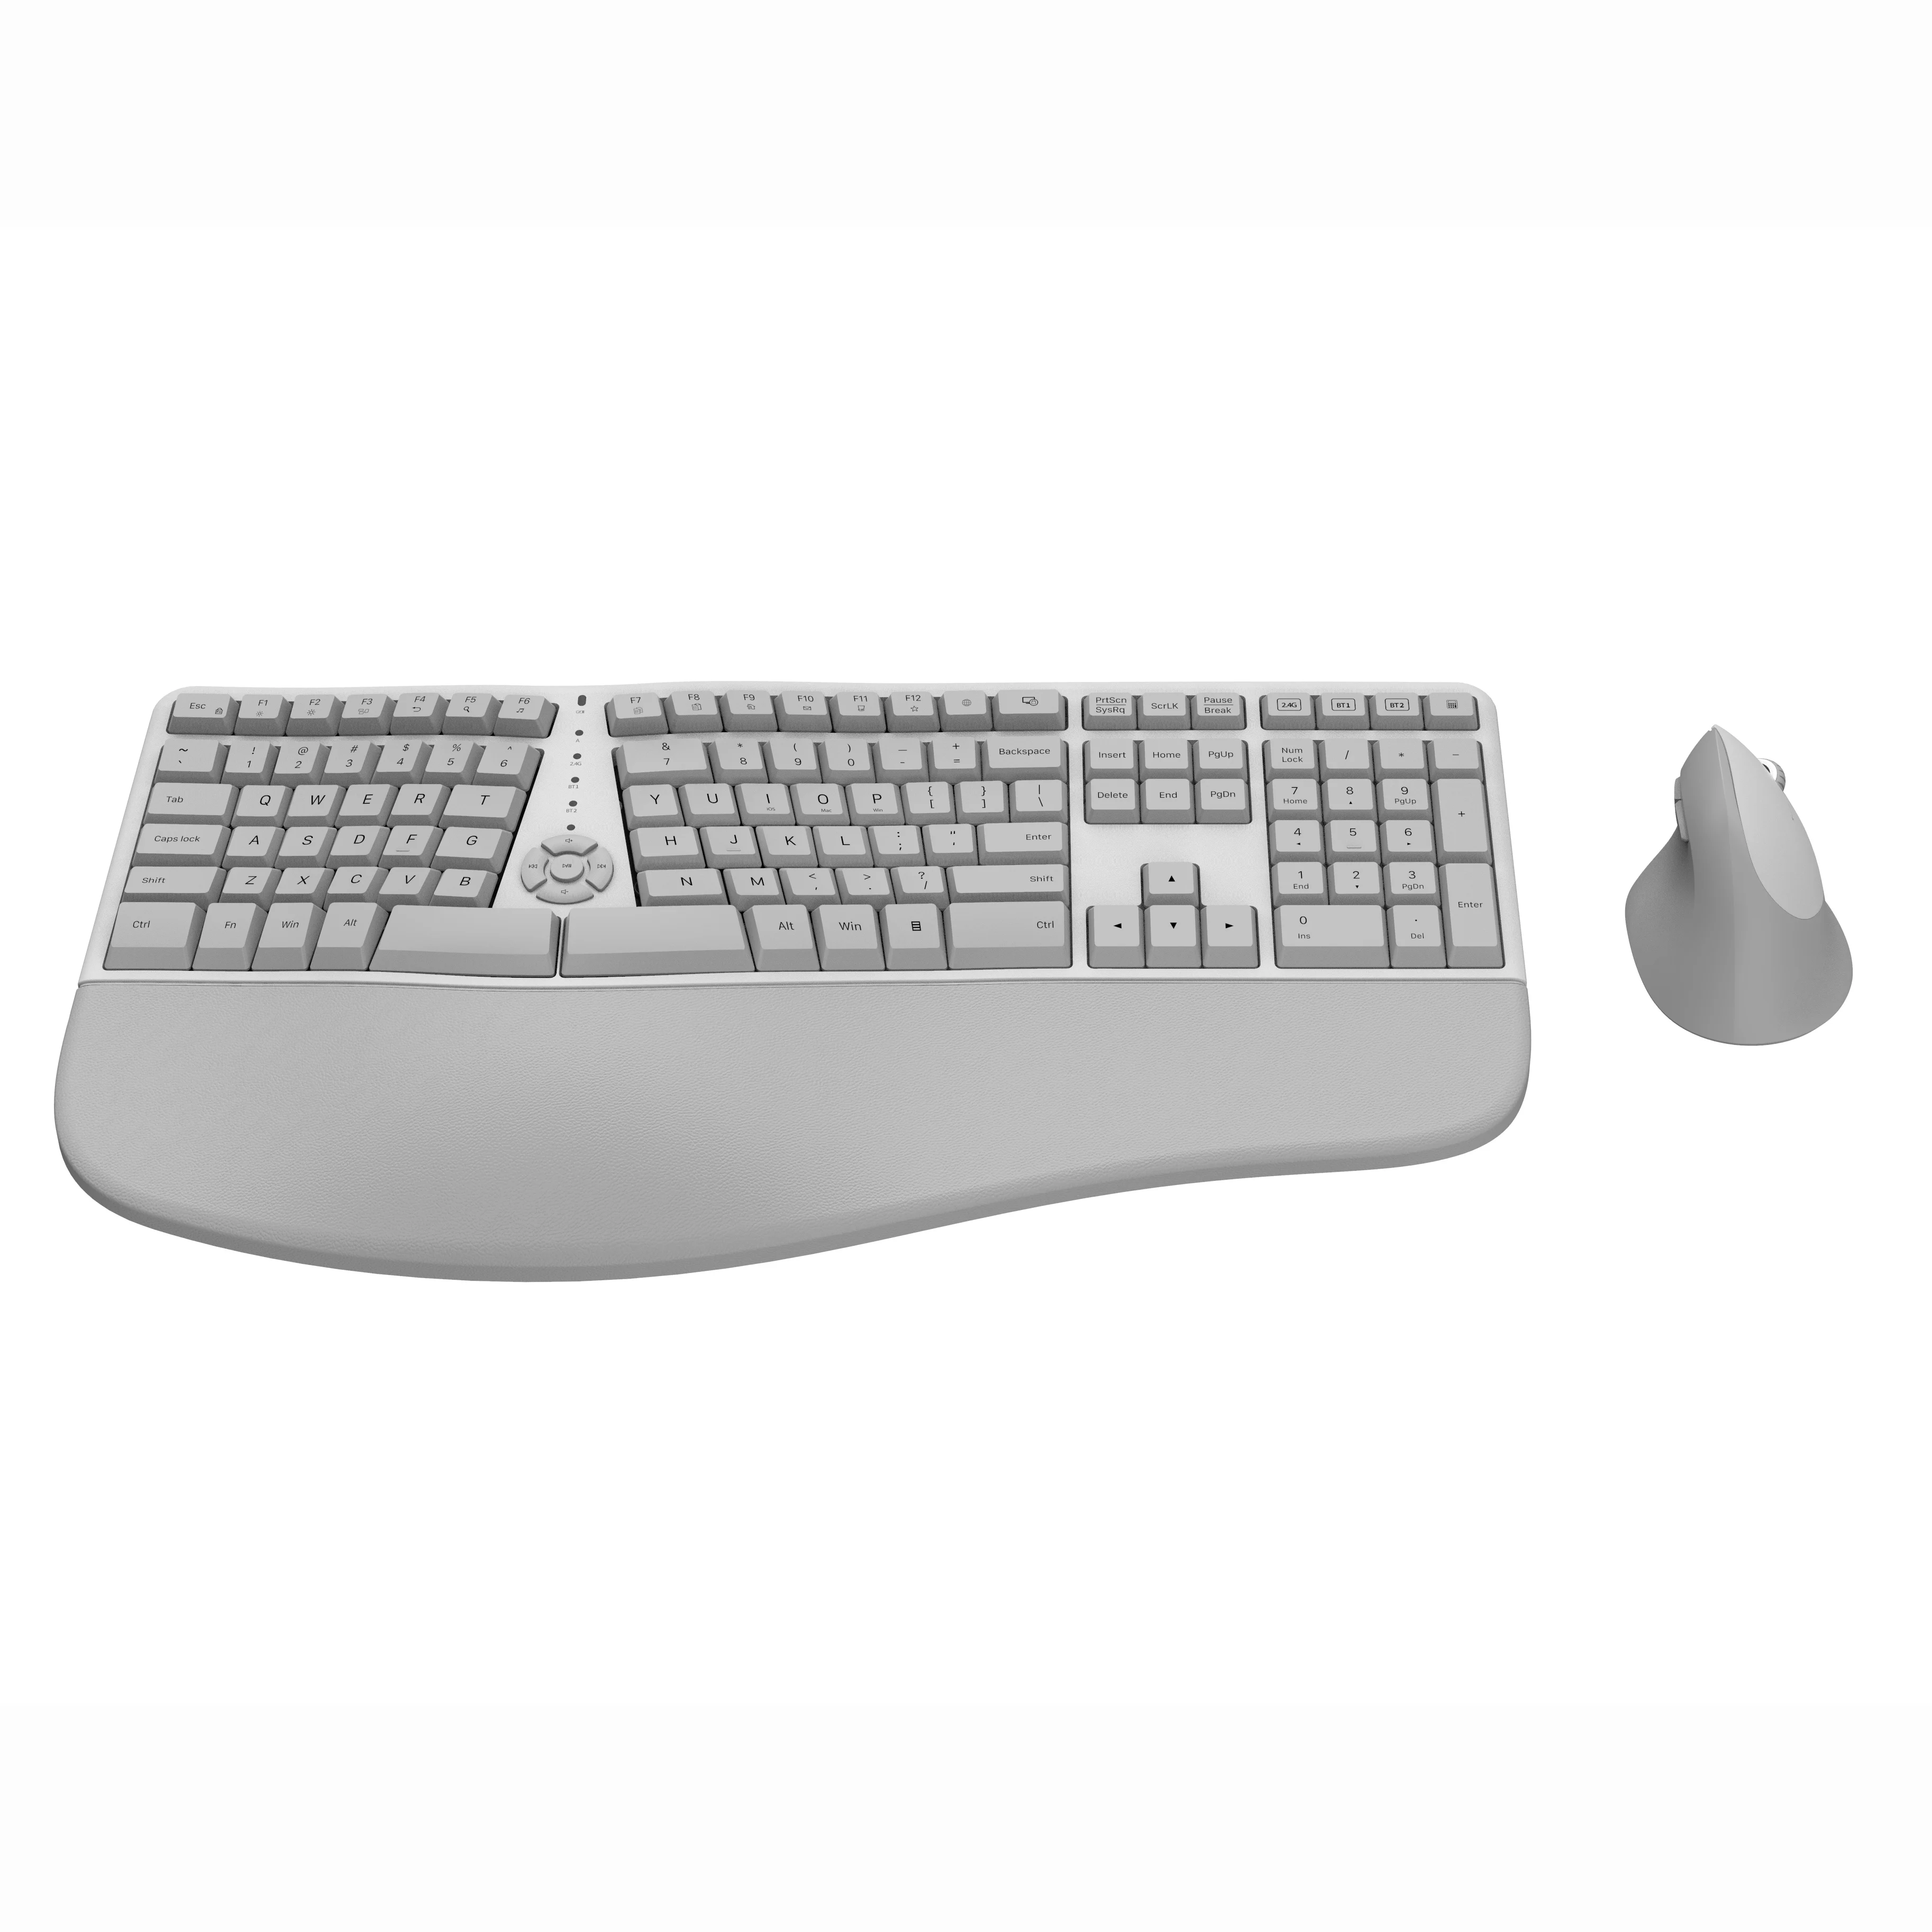 Source Wireless Ergonomic Keyboard With Trackball And Scroll Wheel Usb 2.4g  Quiet Split Keyboard with Wrist Rest quite Membrane Keys on